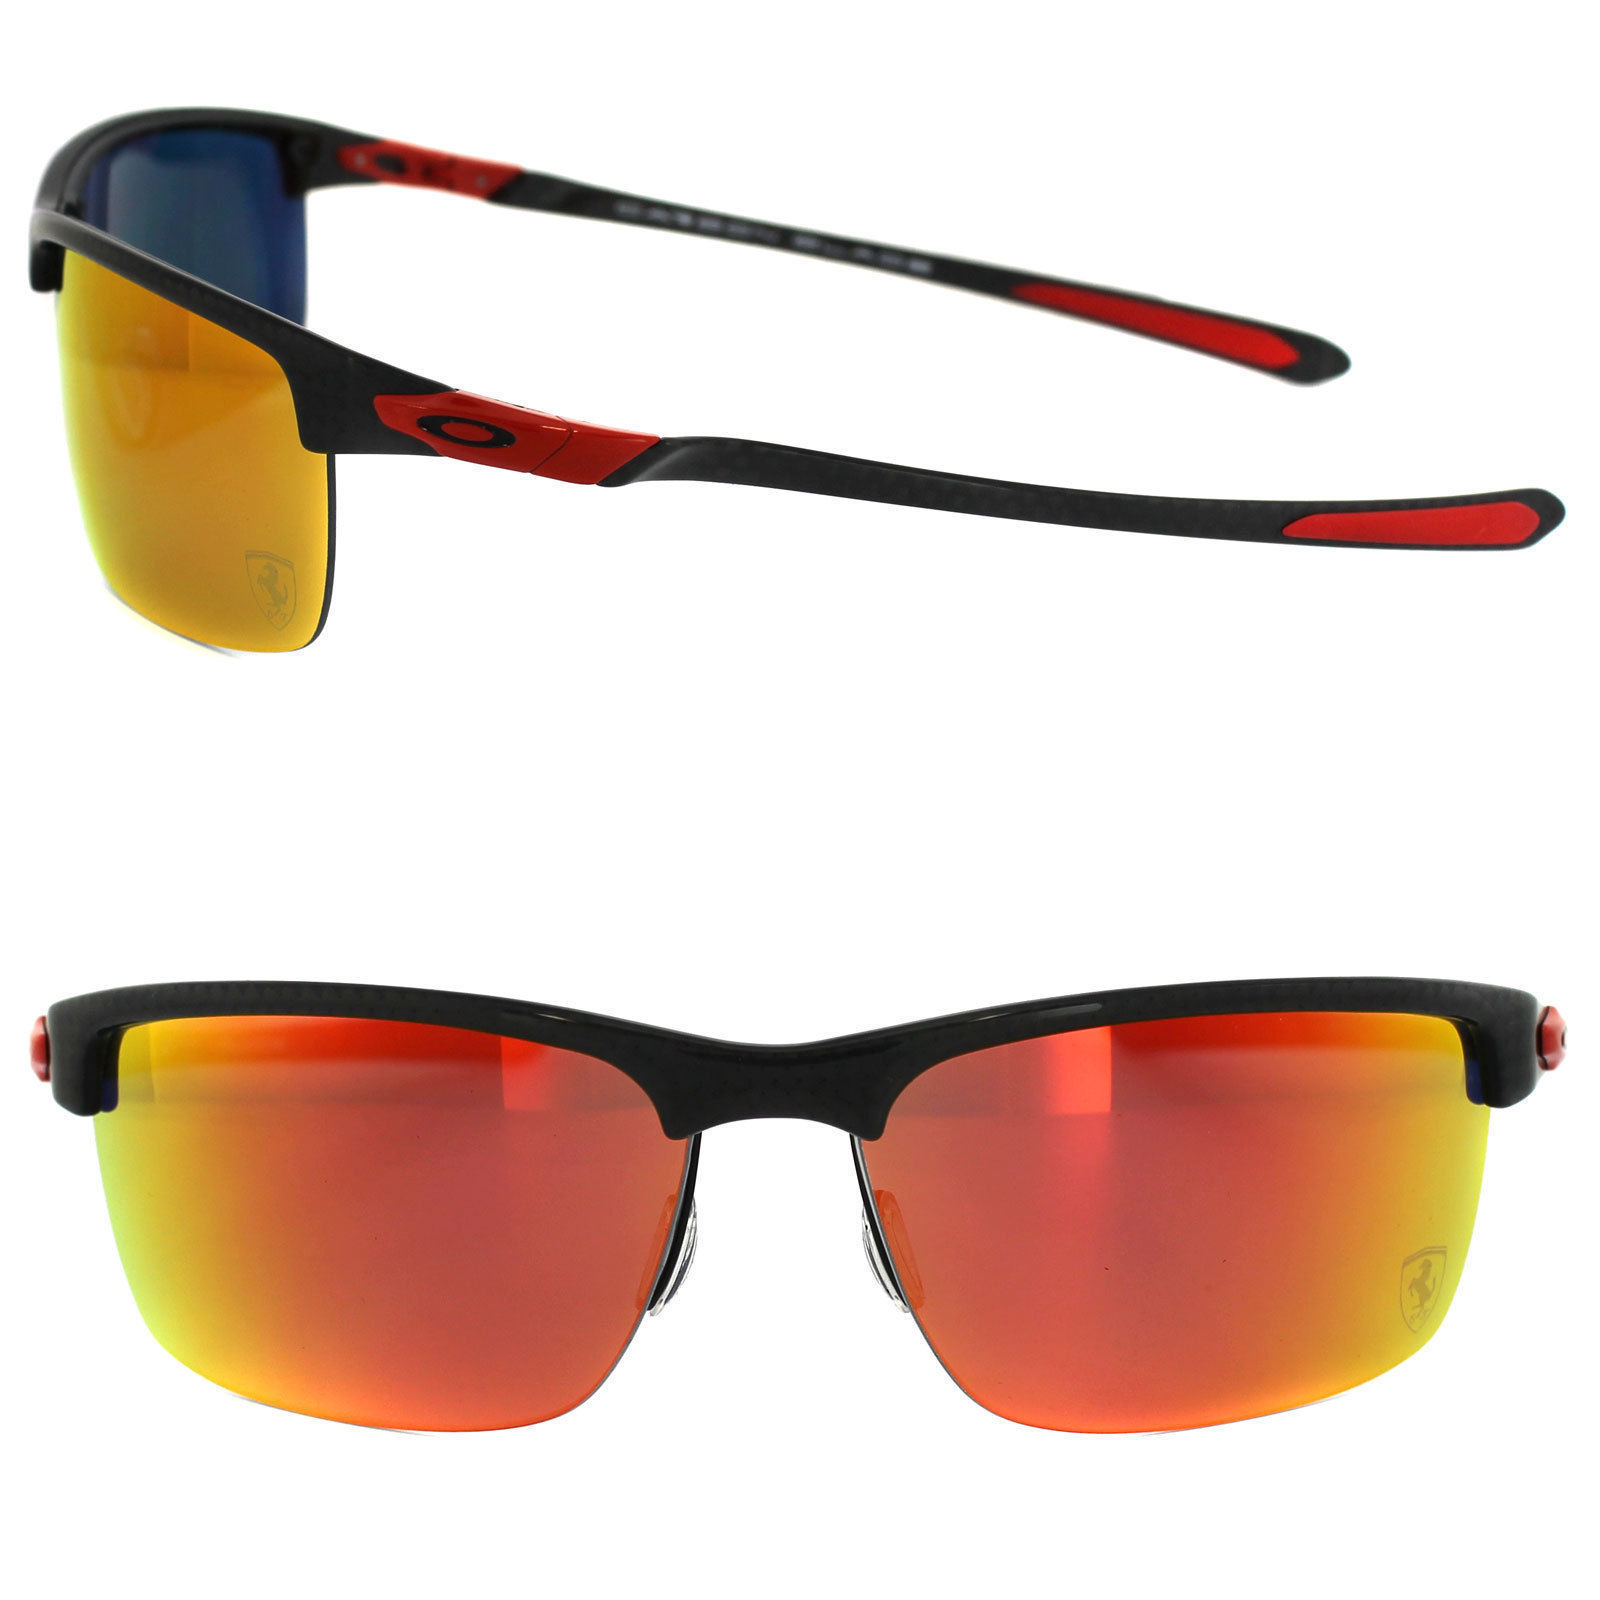 Oakley Sunglasses Oo9174 06 Carbon Blade Ferrari Carbon Fiber Iridium Polarized Other